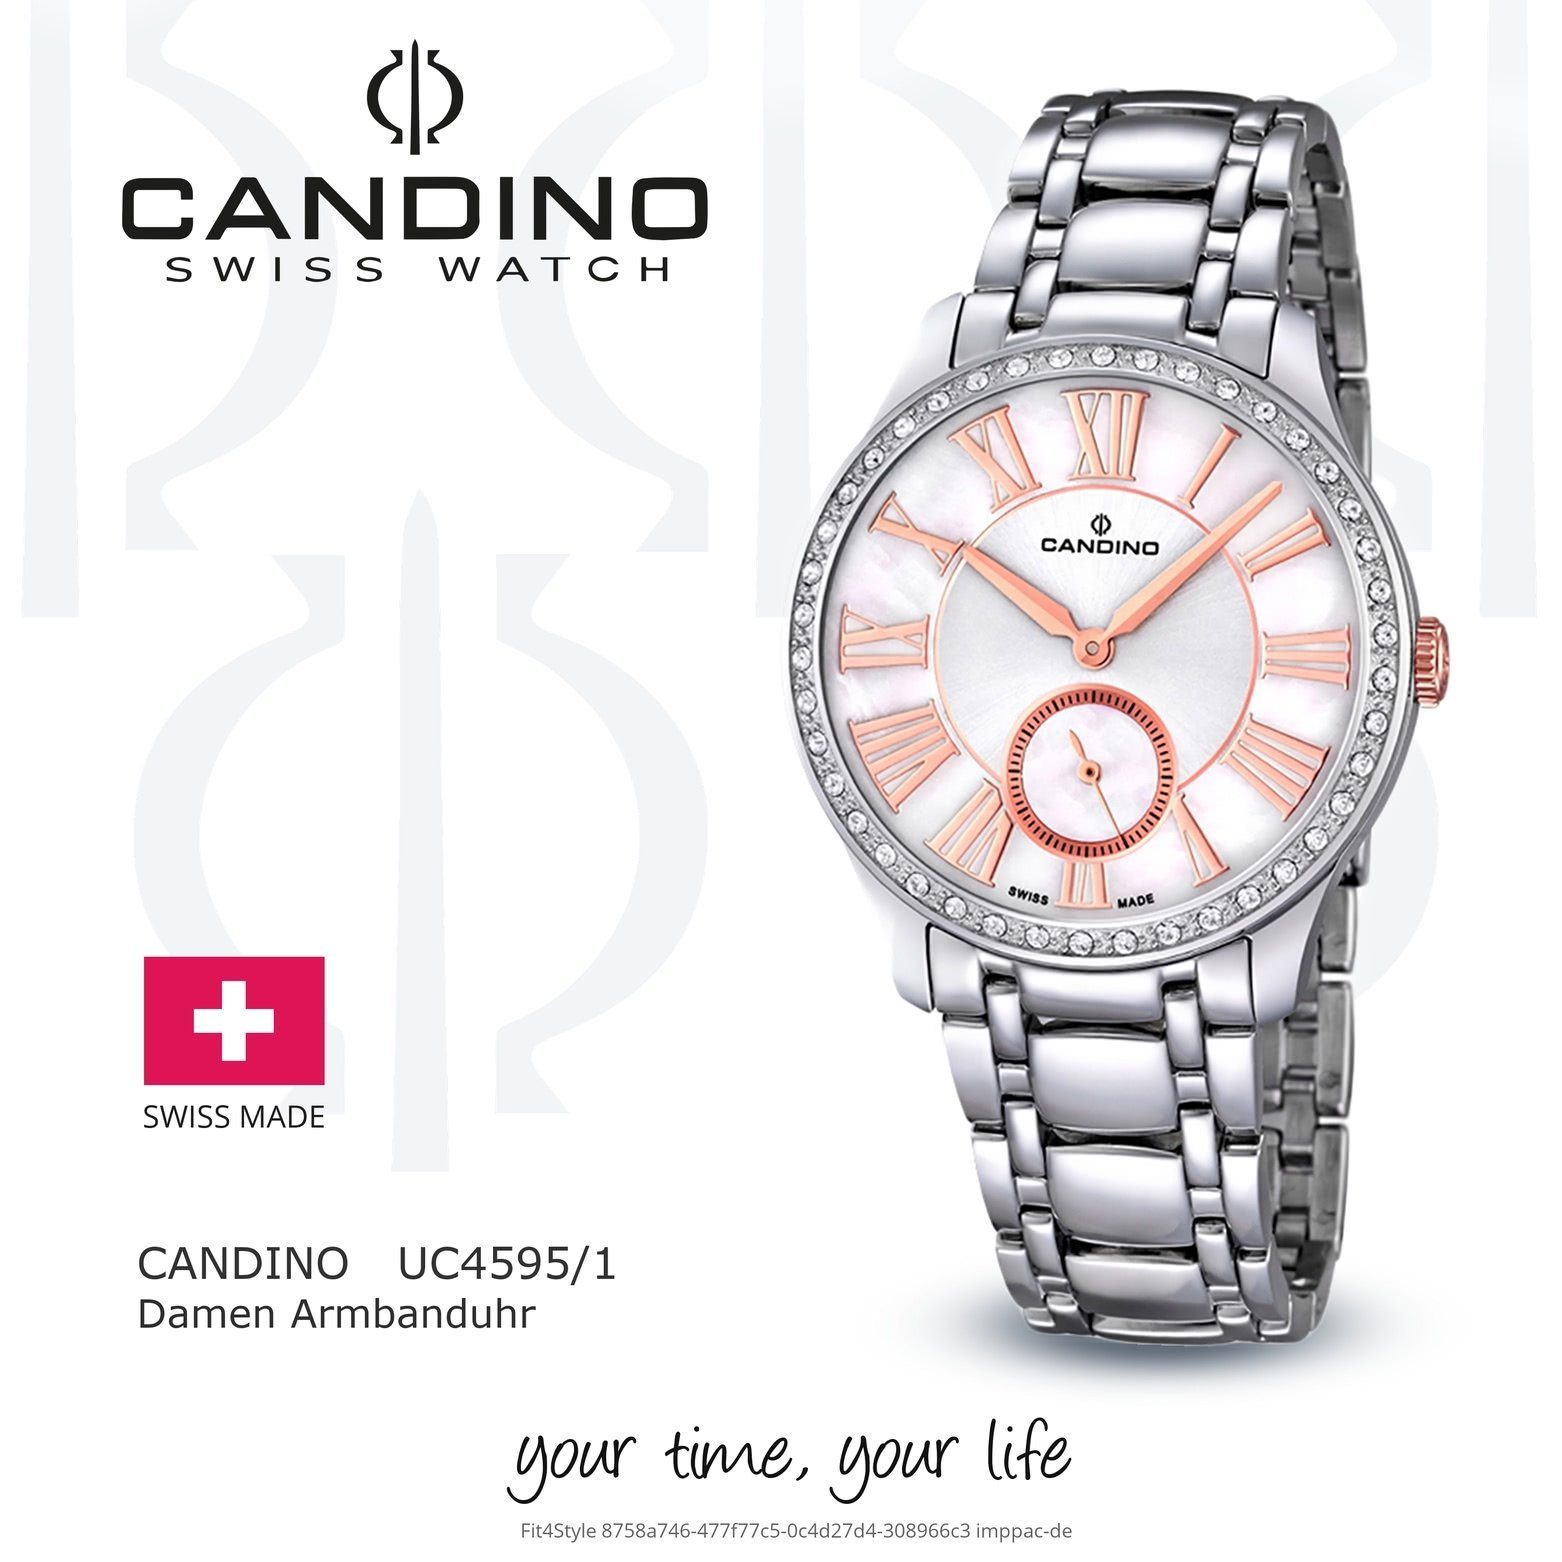 Damen Armbanduhr Candino Uhr Quarzuhr Fashion rund, Analog silber, C4595/1, Candino Edelstahlarmband Damen